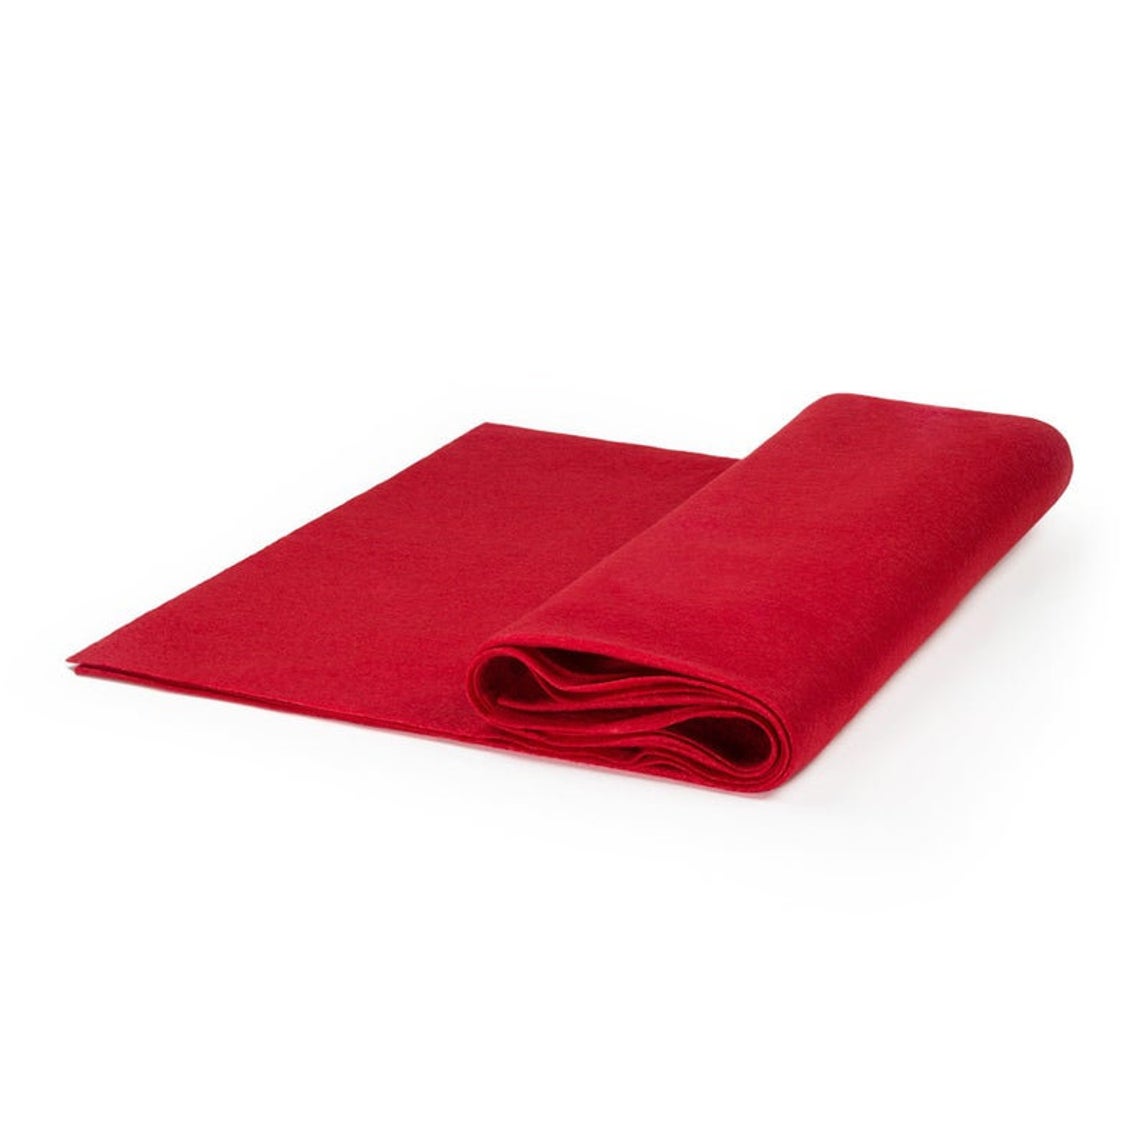 Acrylic Felt Fabric By The Roll | 20 yards | Wholesale Fabric ICE FABRICS Red